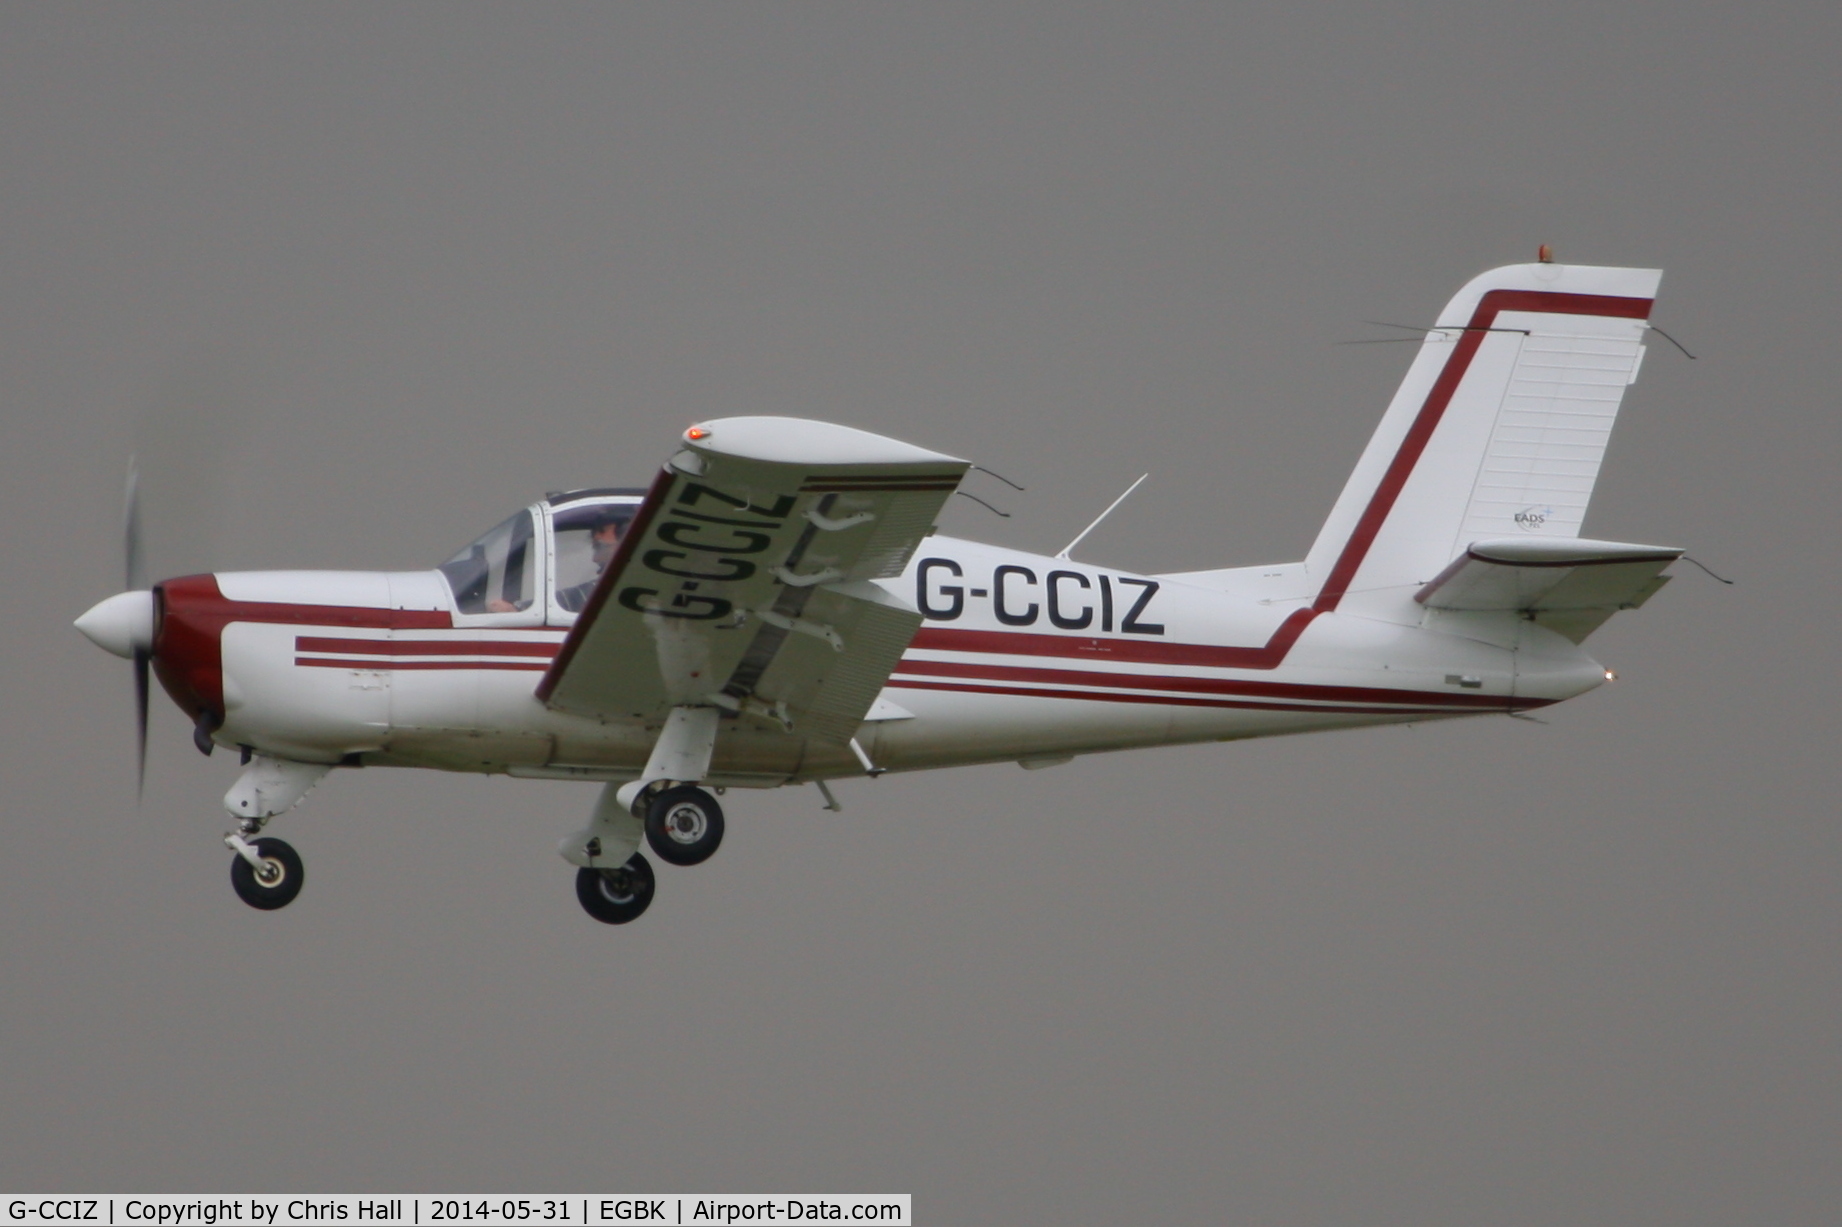 G-CCIZ, 2001 PZL-Okecie PZL-110 Koliber 160A C/N 04010087, at AeroExpo 2014